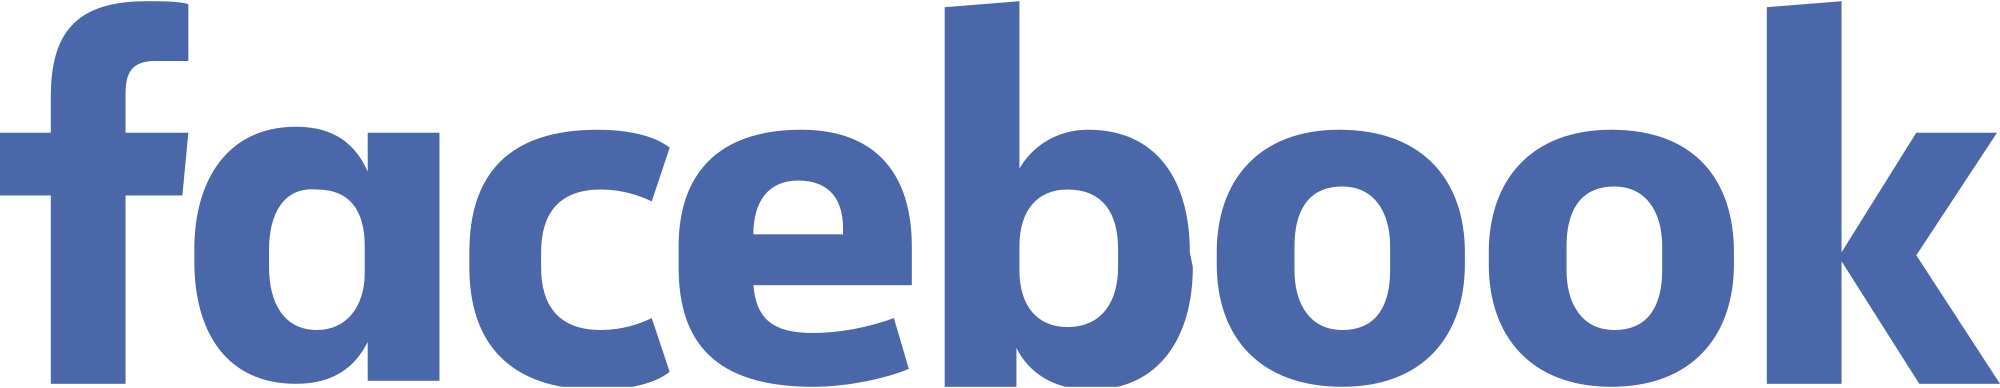 Light Blue Facebook Logo - File:Facebook Logo (2015) light.svg - Wikimedia Commons